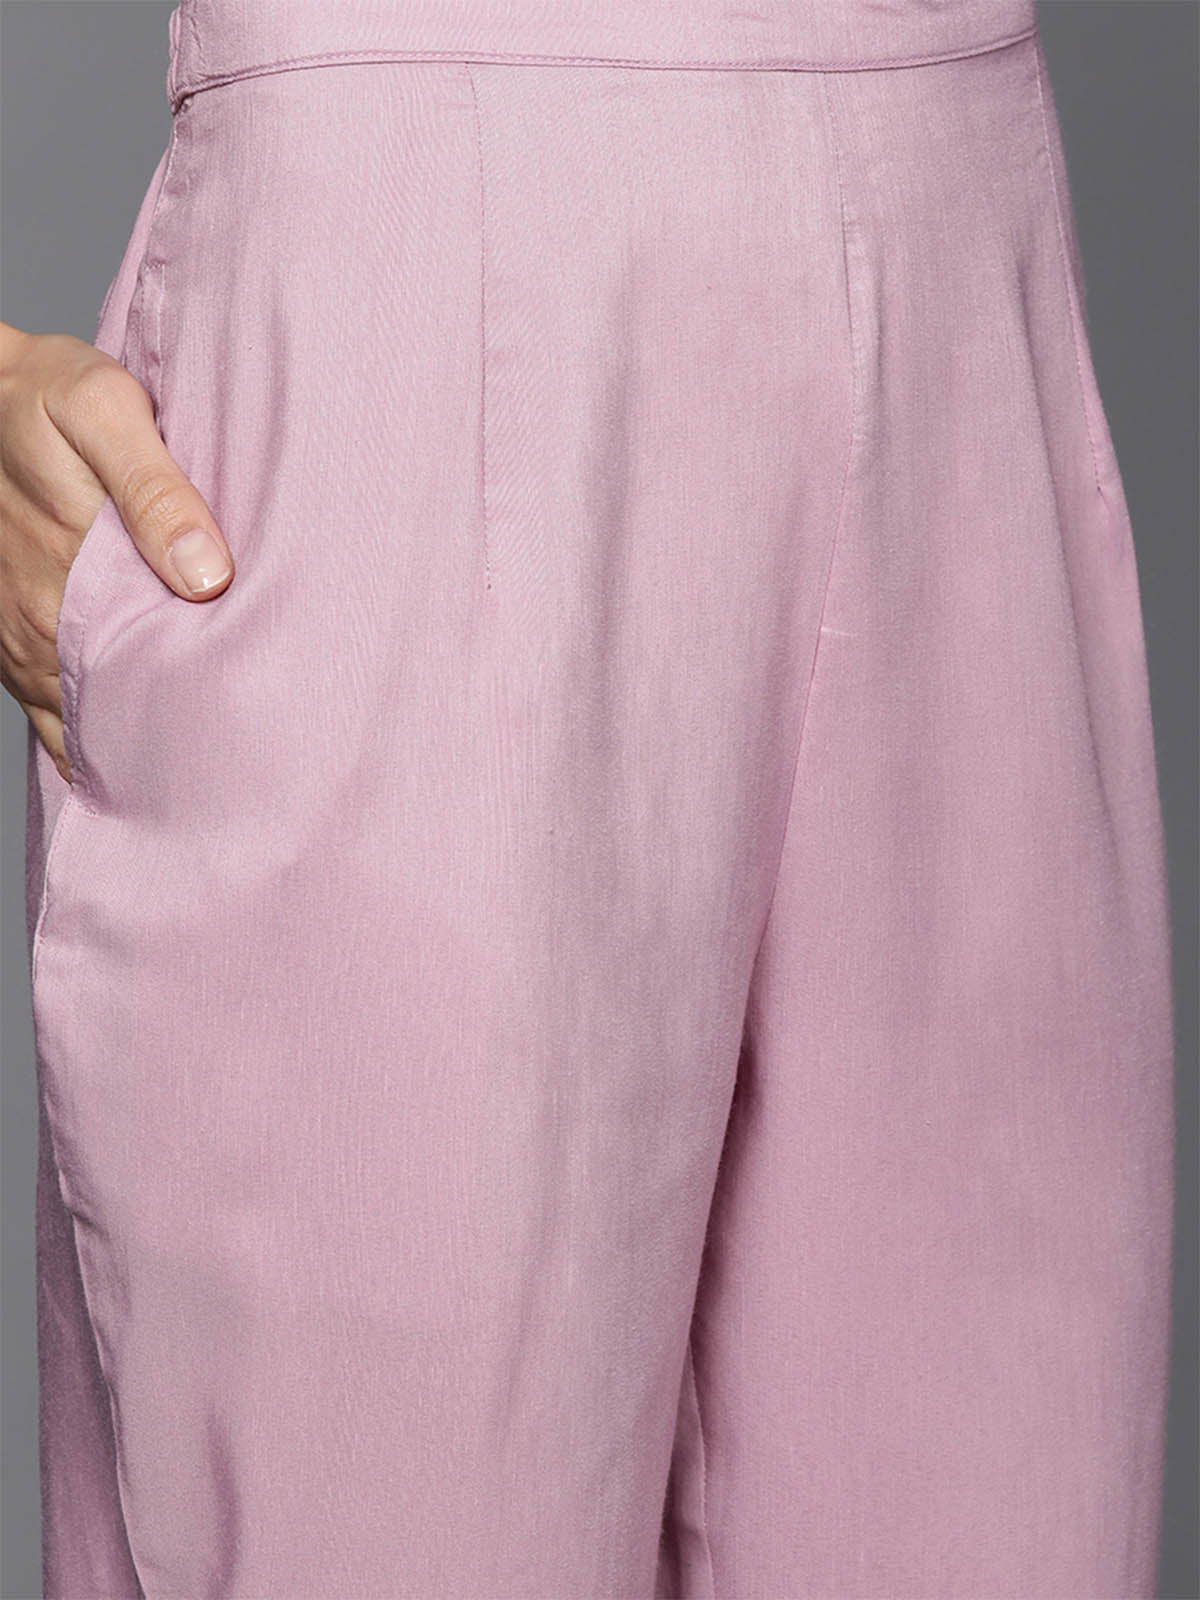 Women's Lavender Foil Printed Straight Kurta Trouser With Dupatta Set - Odette